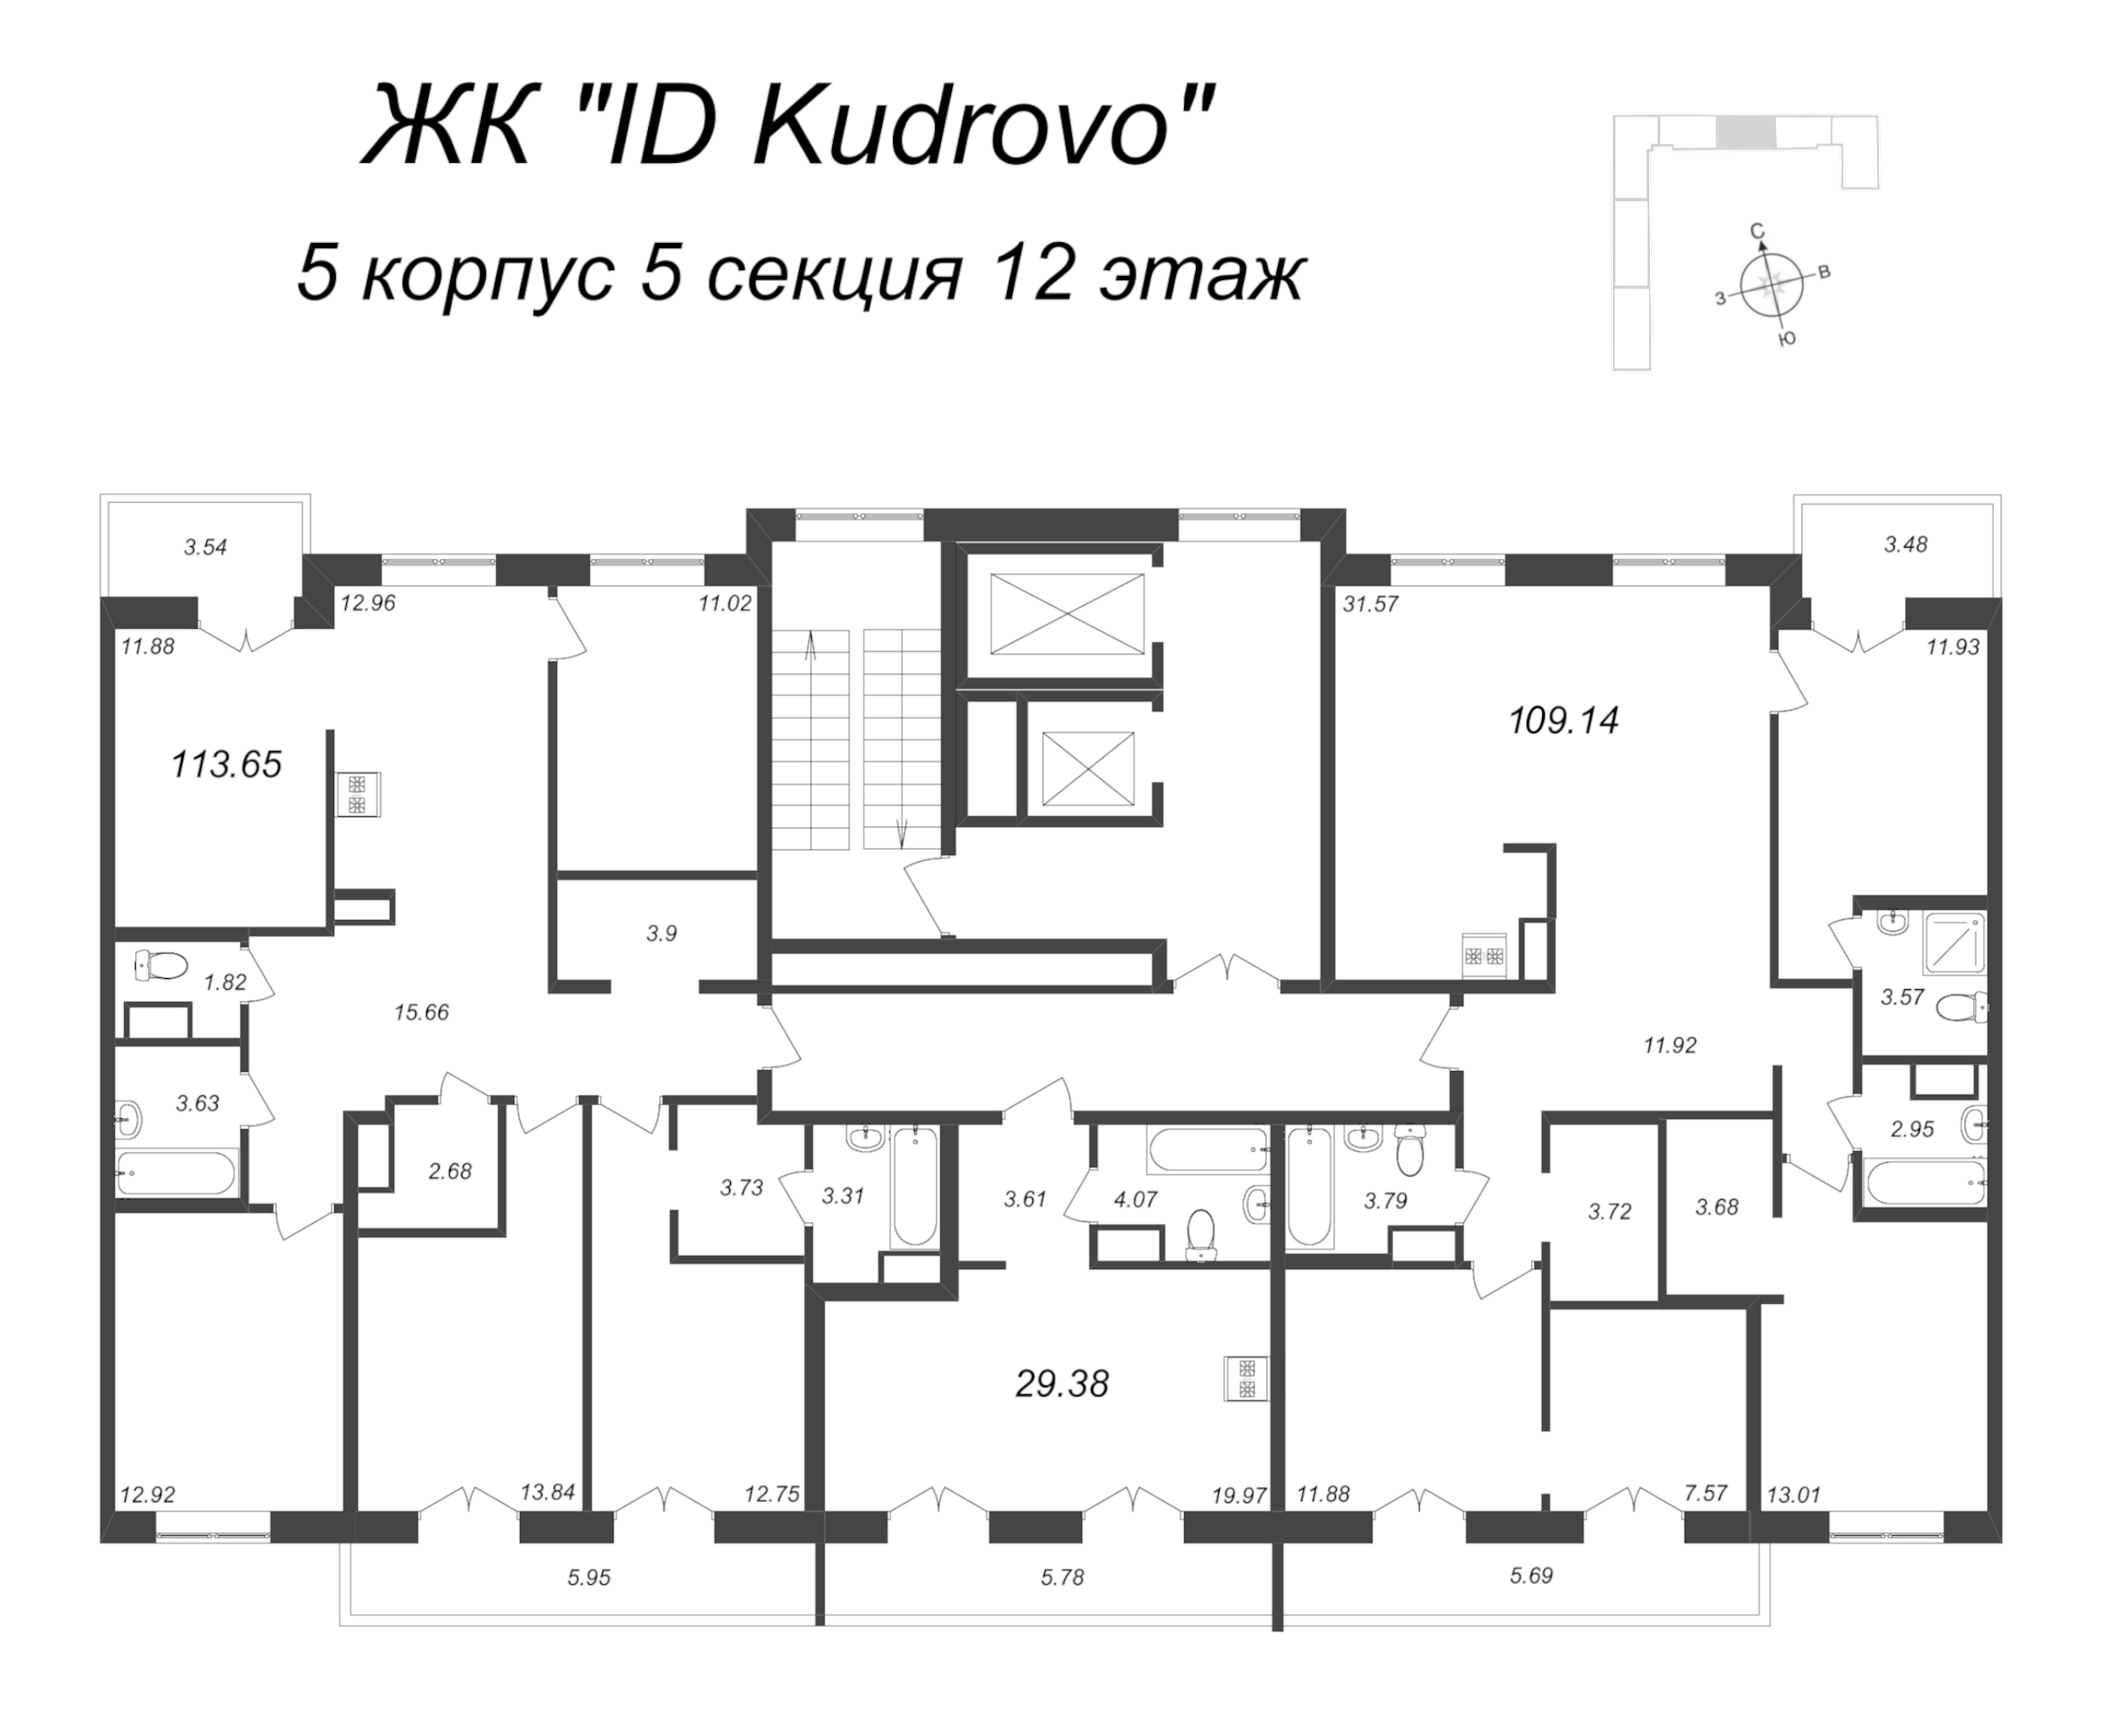 5-комнатная (Евро) квартира, 109.14 м² - планировка этажа